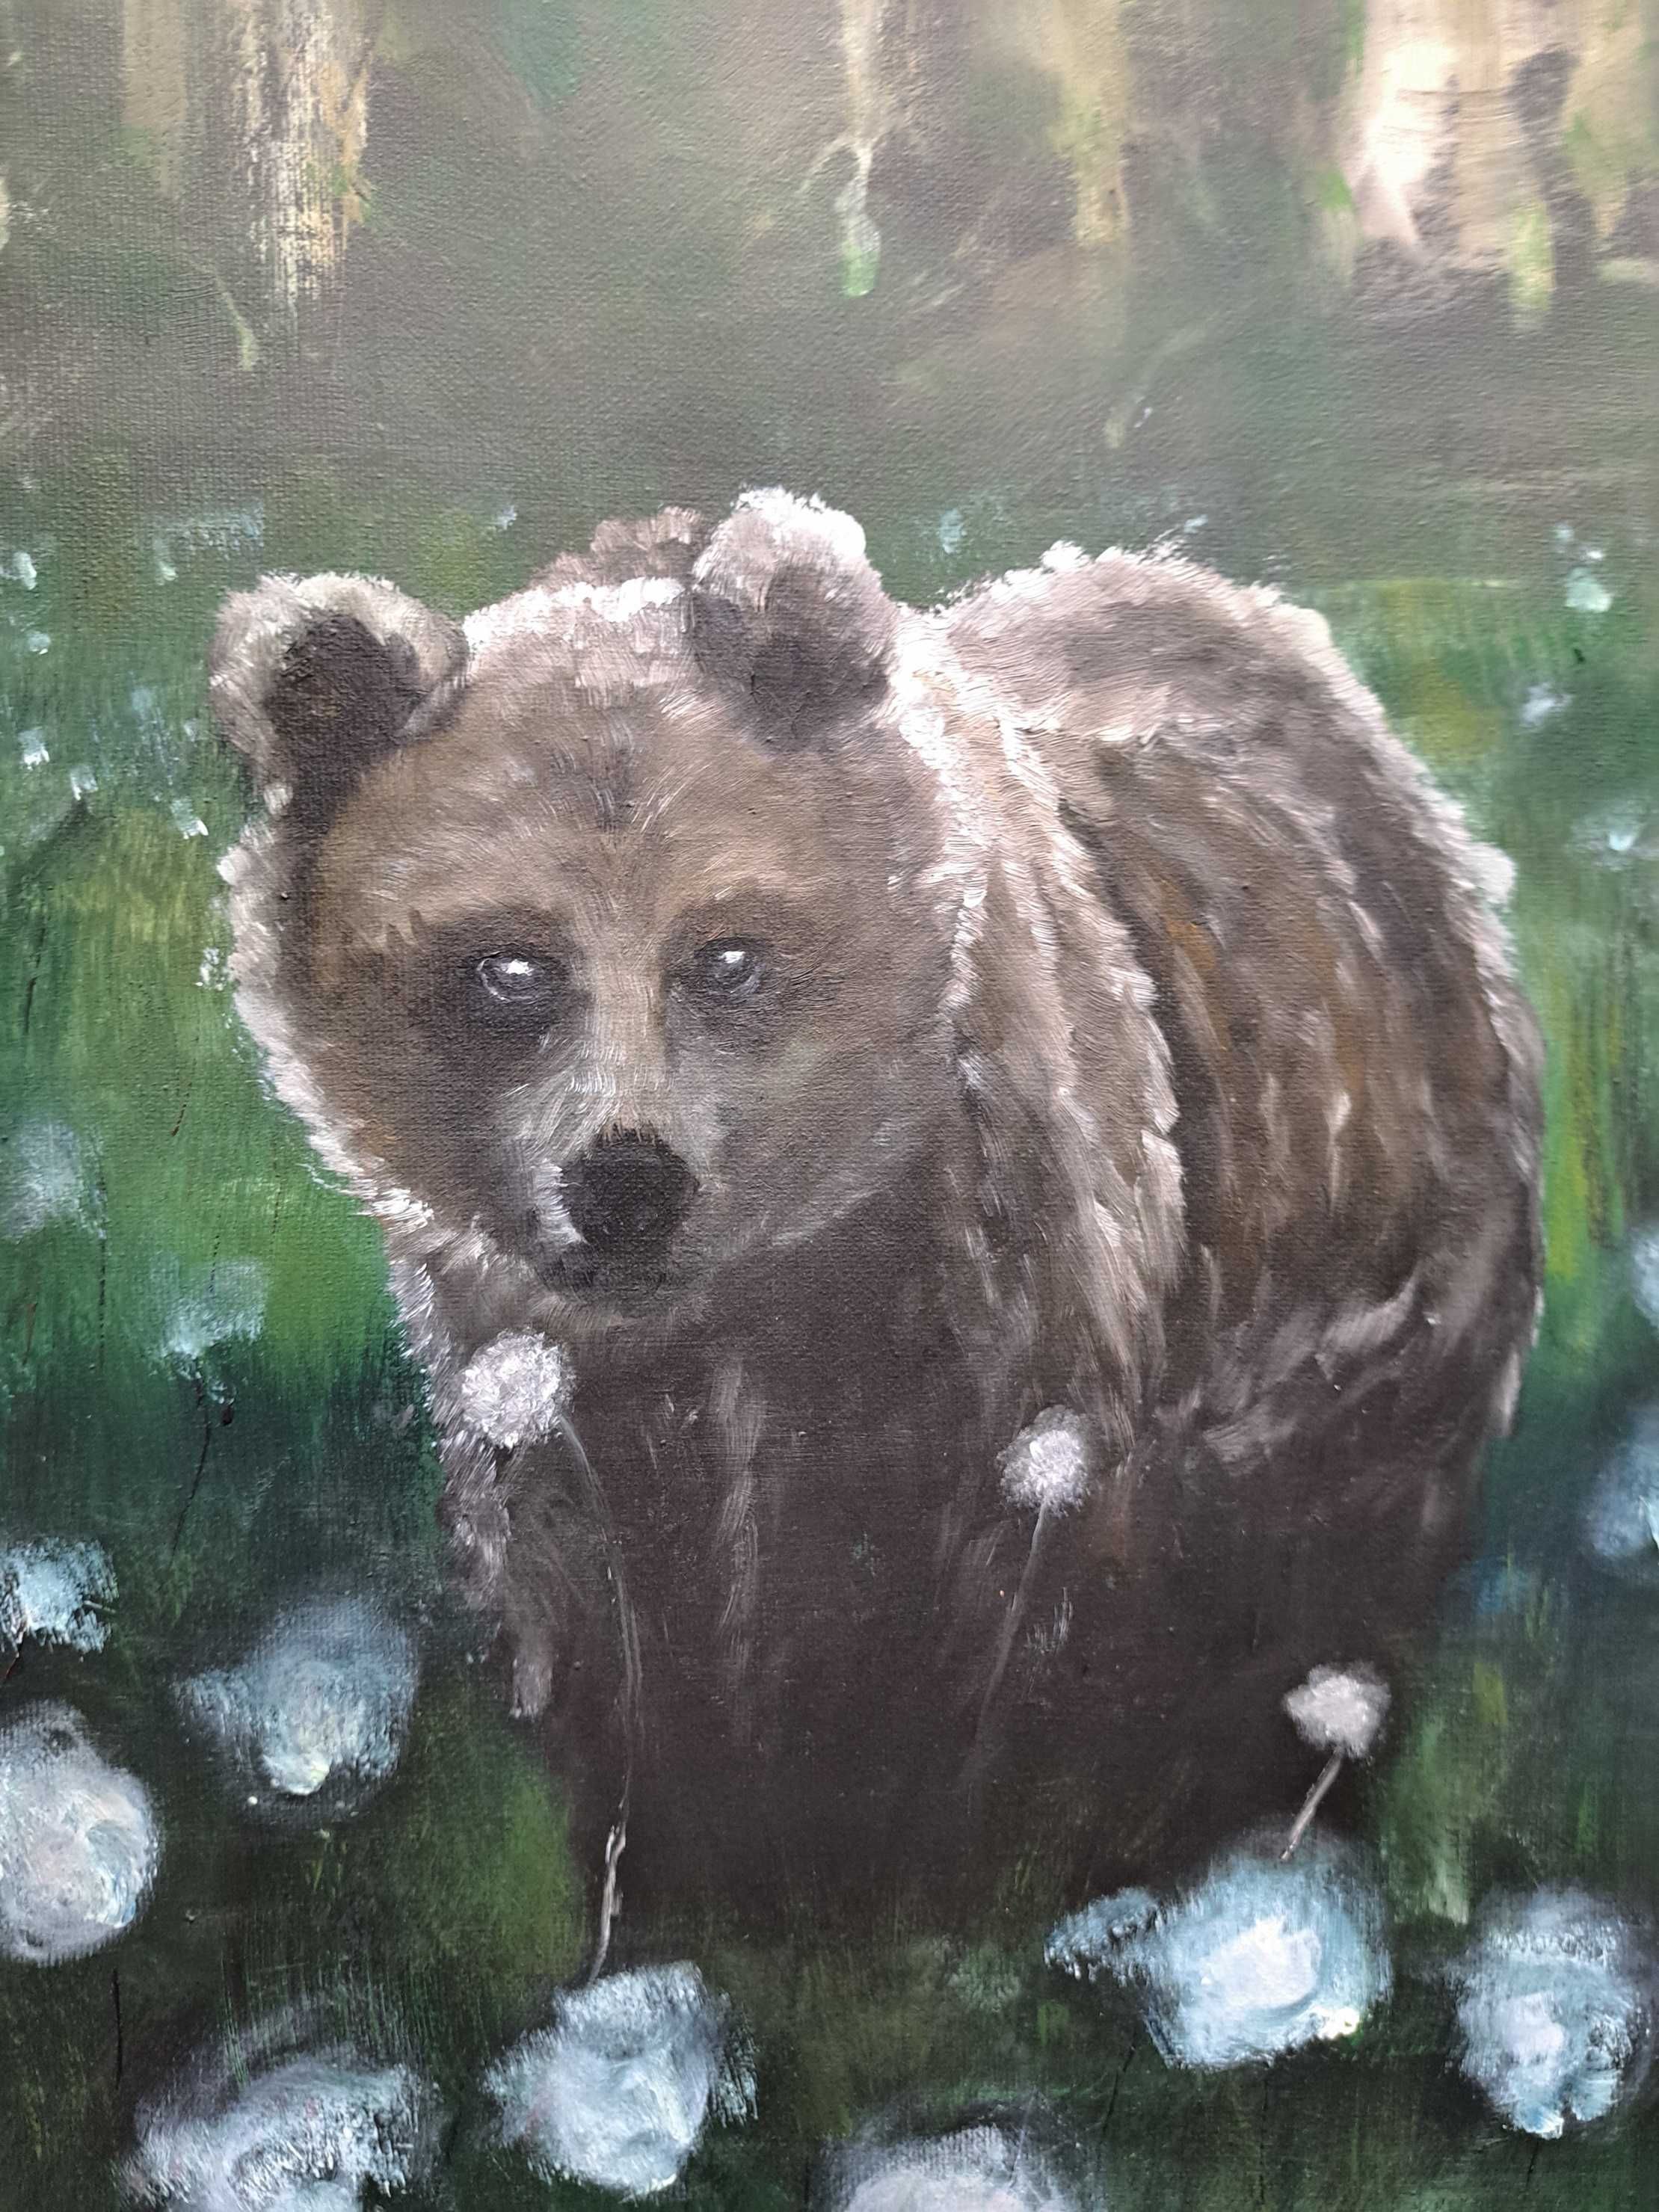 Spotkanie obraz olejny płótno 60x80 las natura łąka niedźwiedź kurier